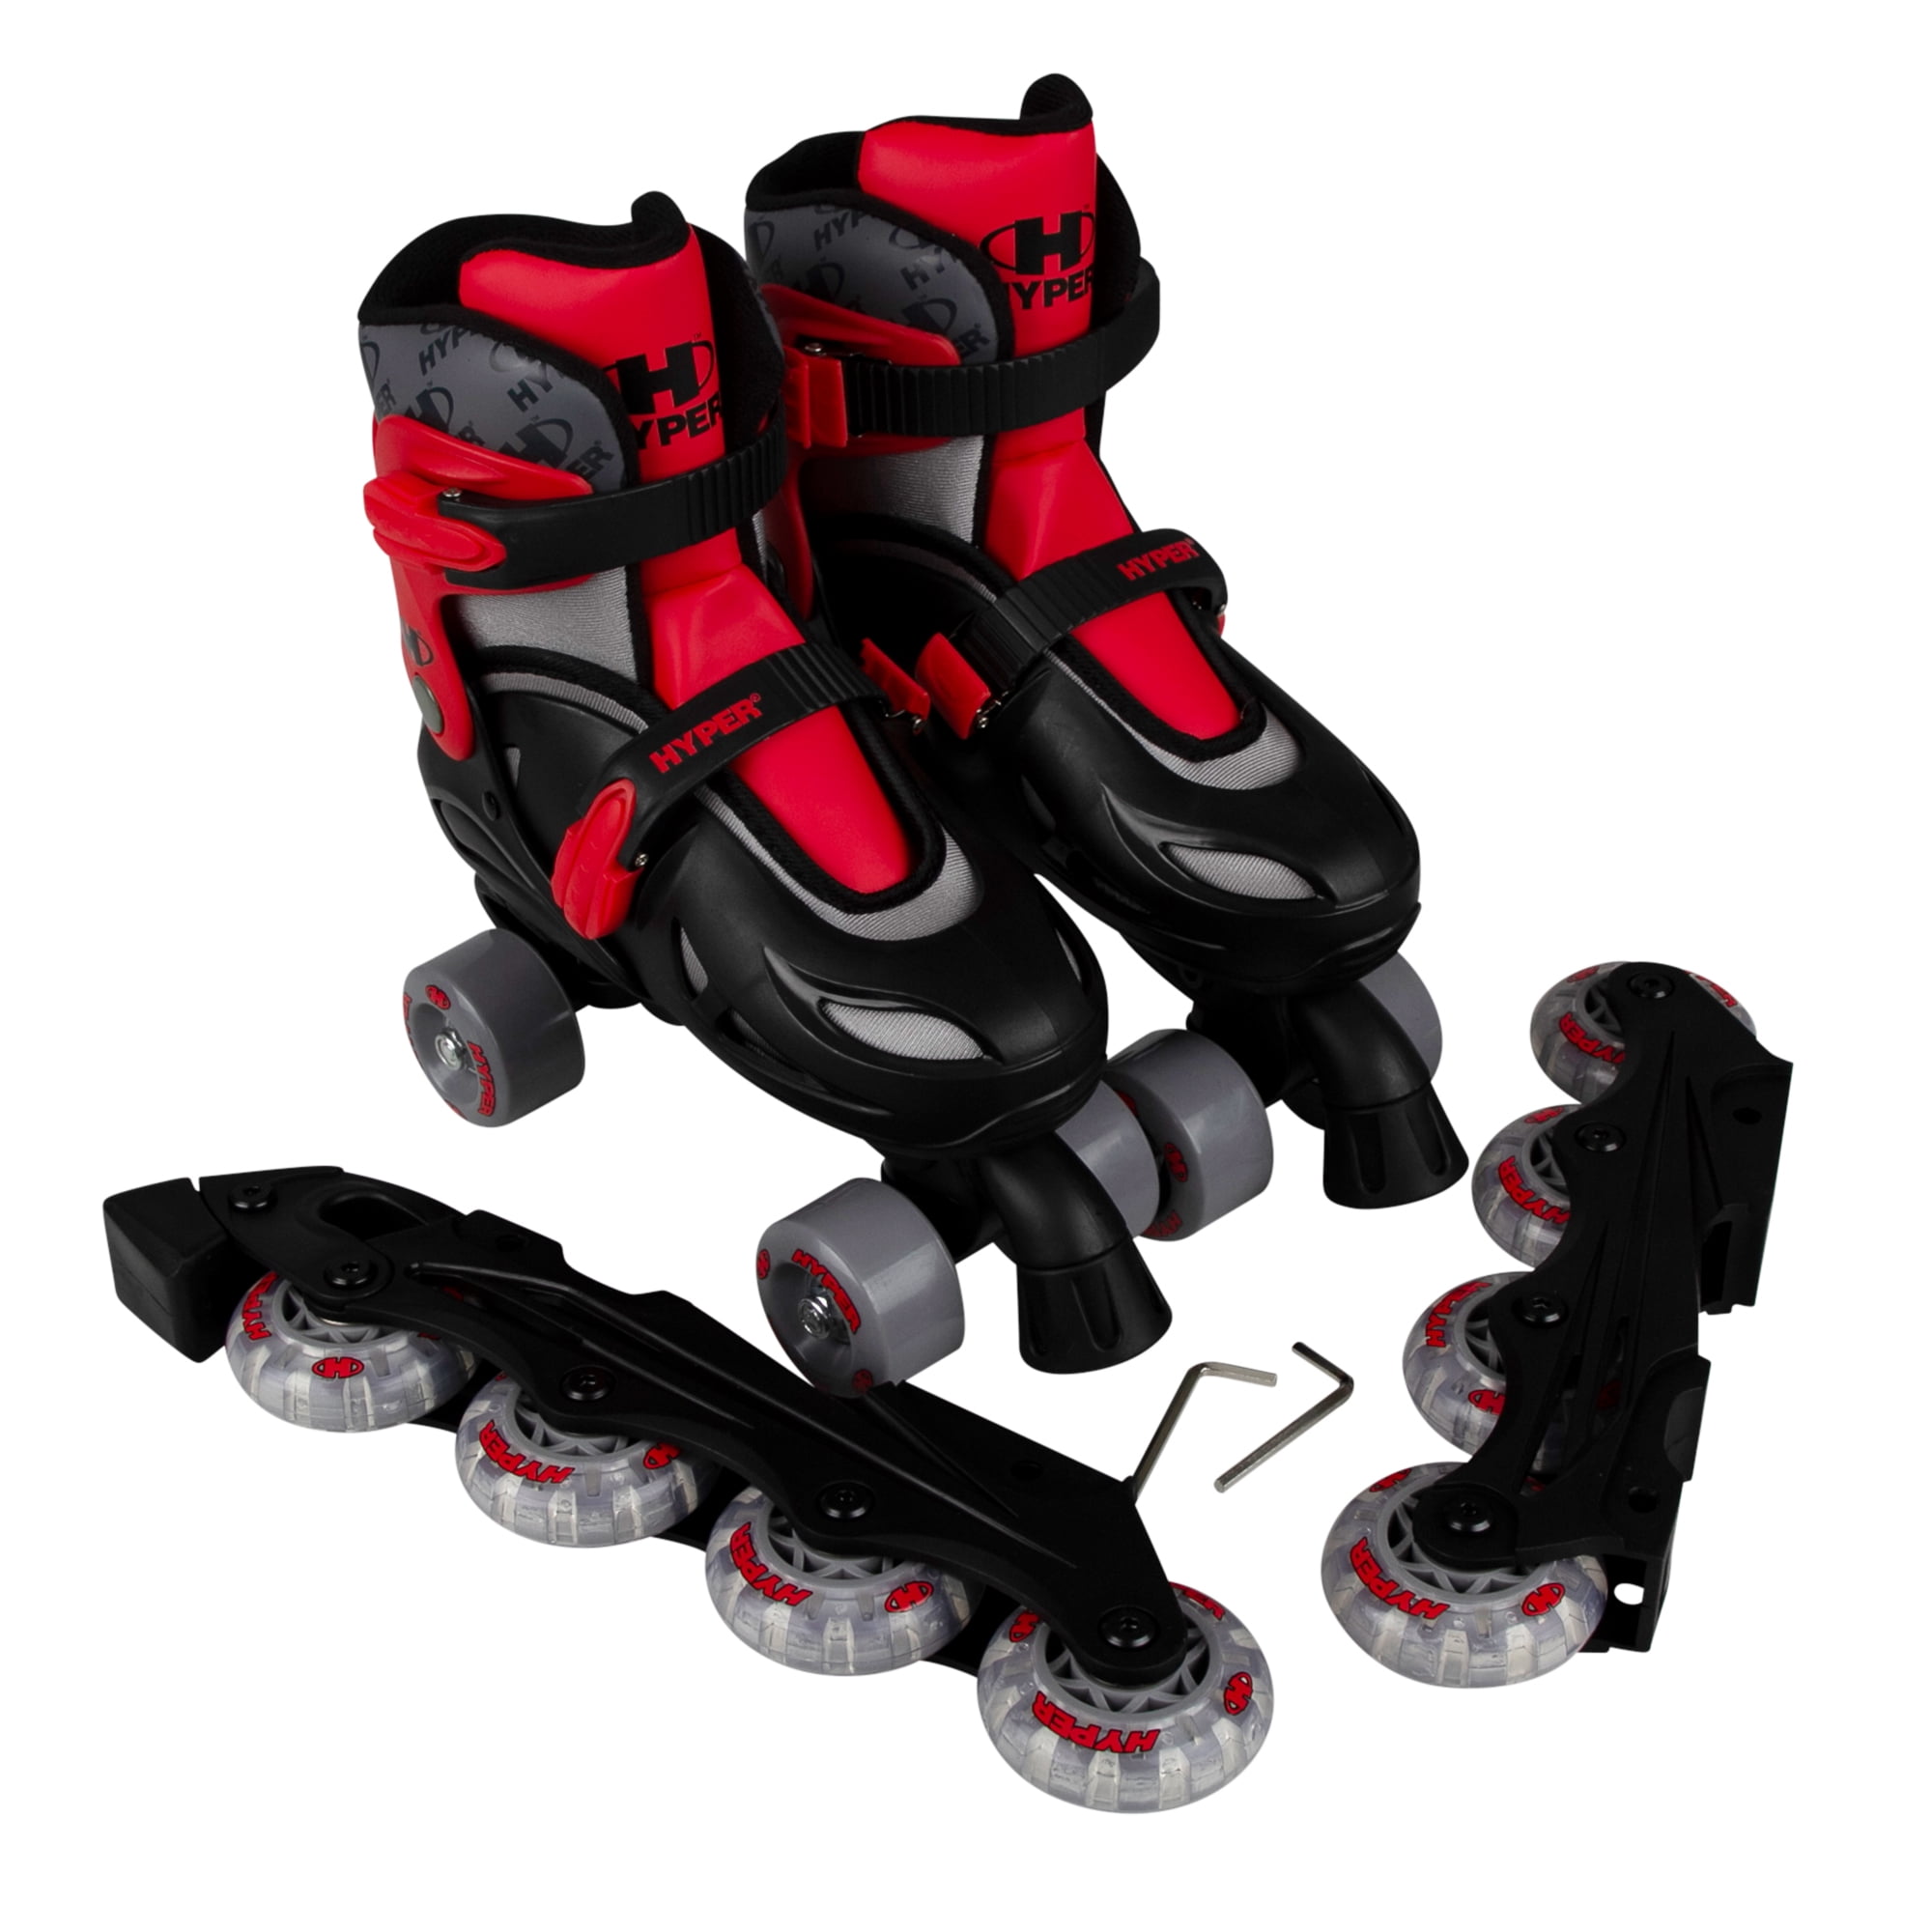 Details about   Schwinn Roller Blades Challenge Series Youth Adjustable Skates Size 8-9.5 